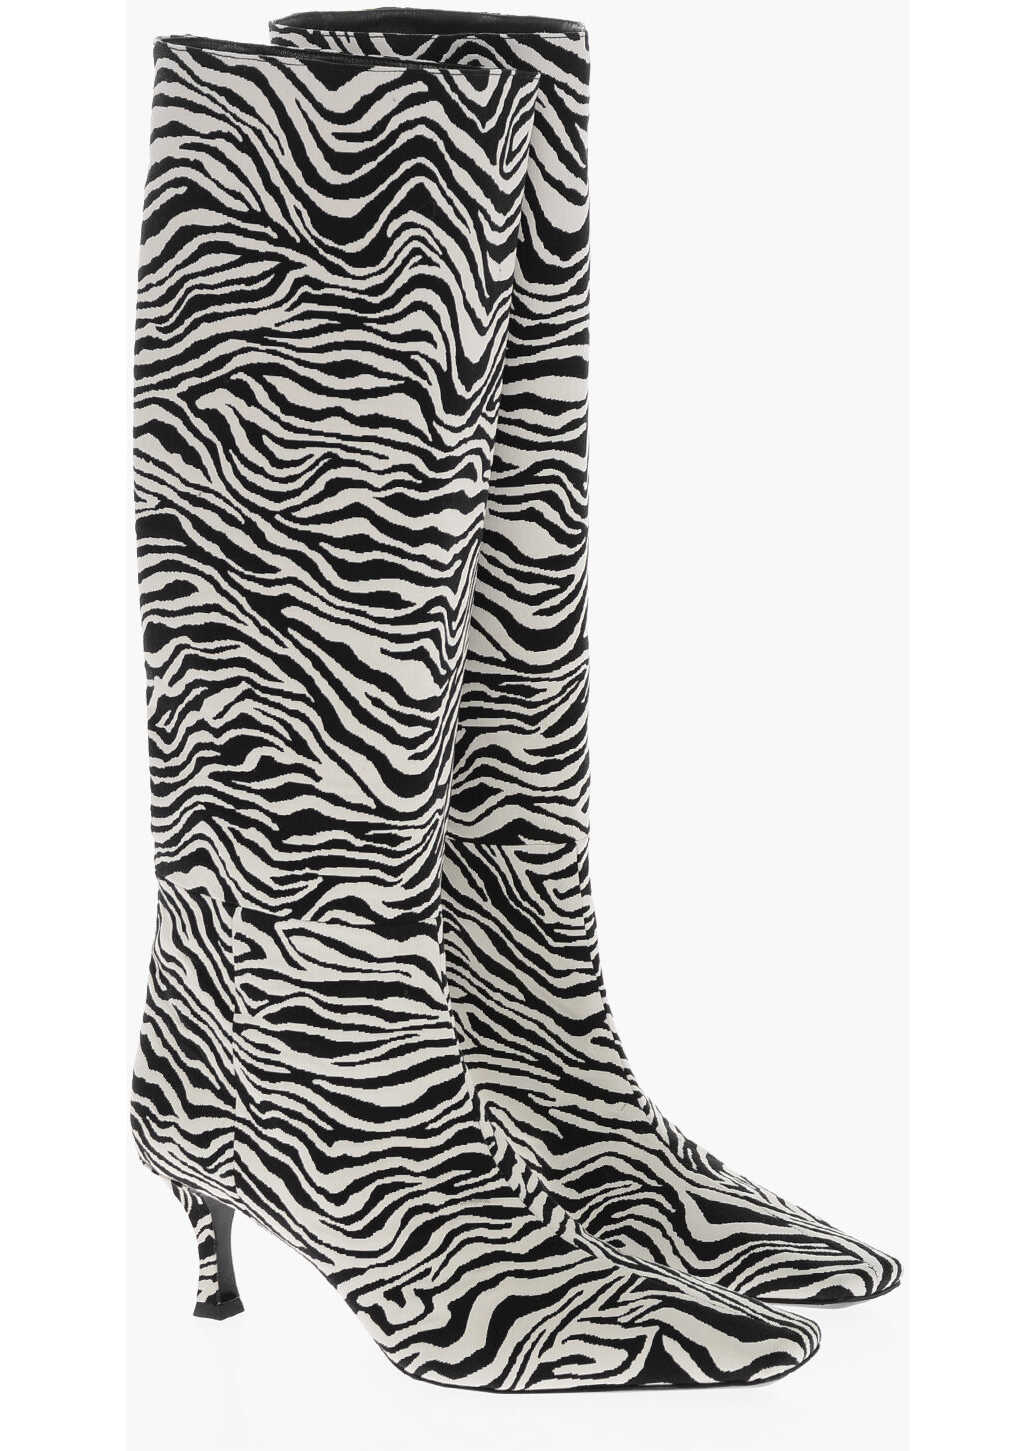 Proenza Schouler Under The Knee Zebra Fabric Boots With Spool Heel 6Cm Black & White